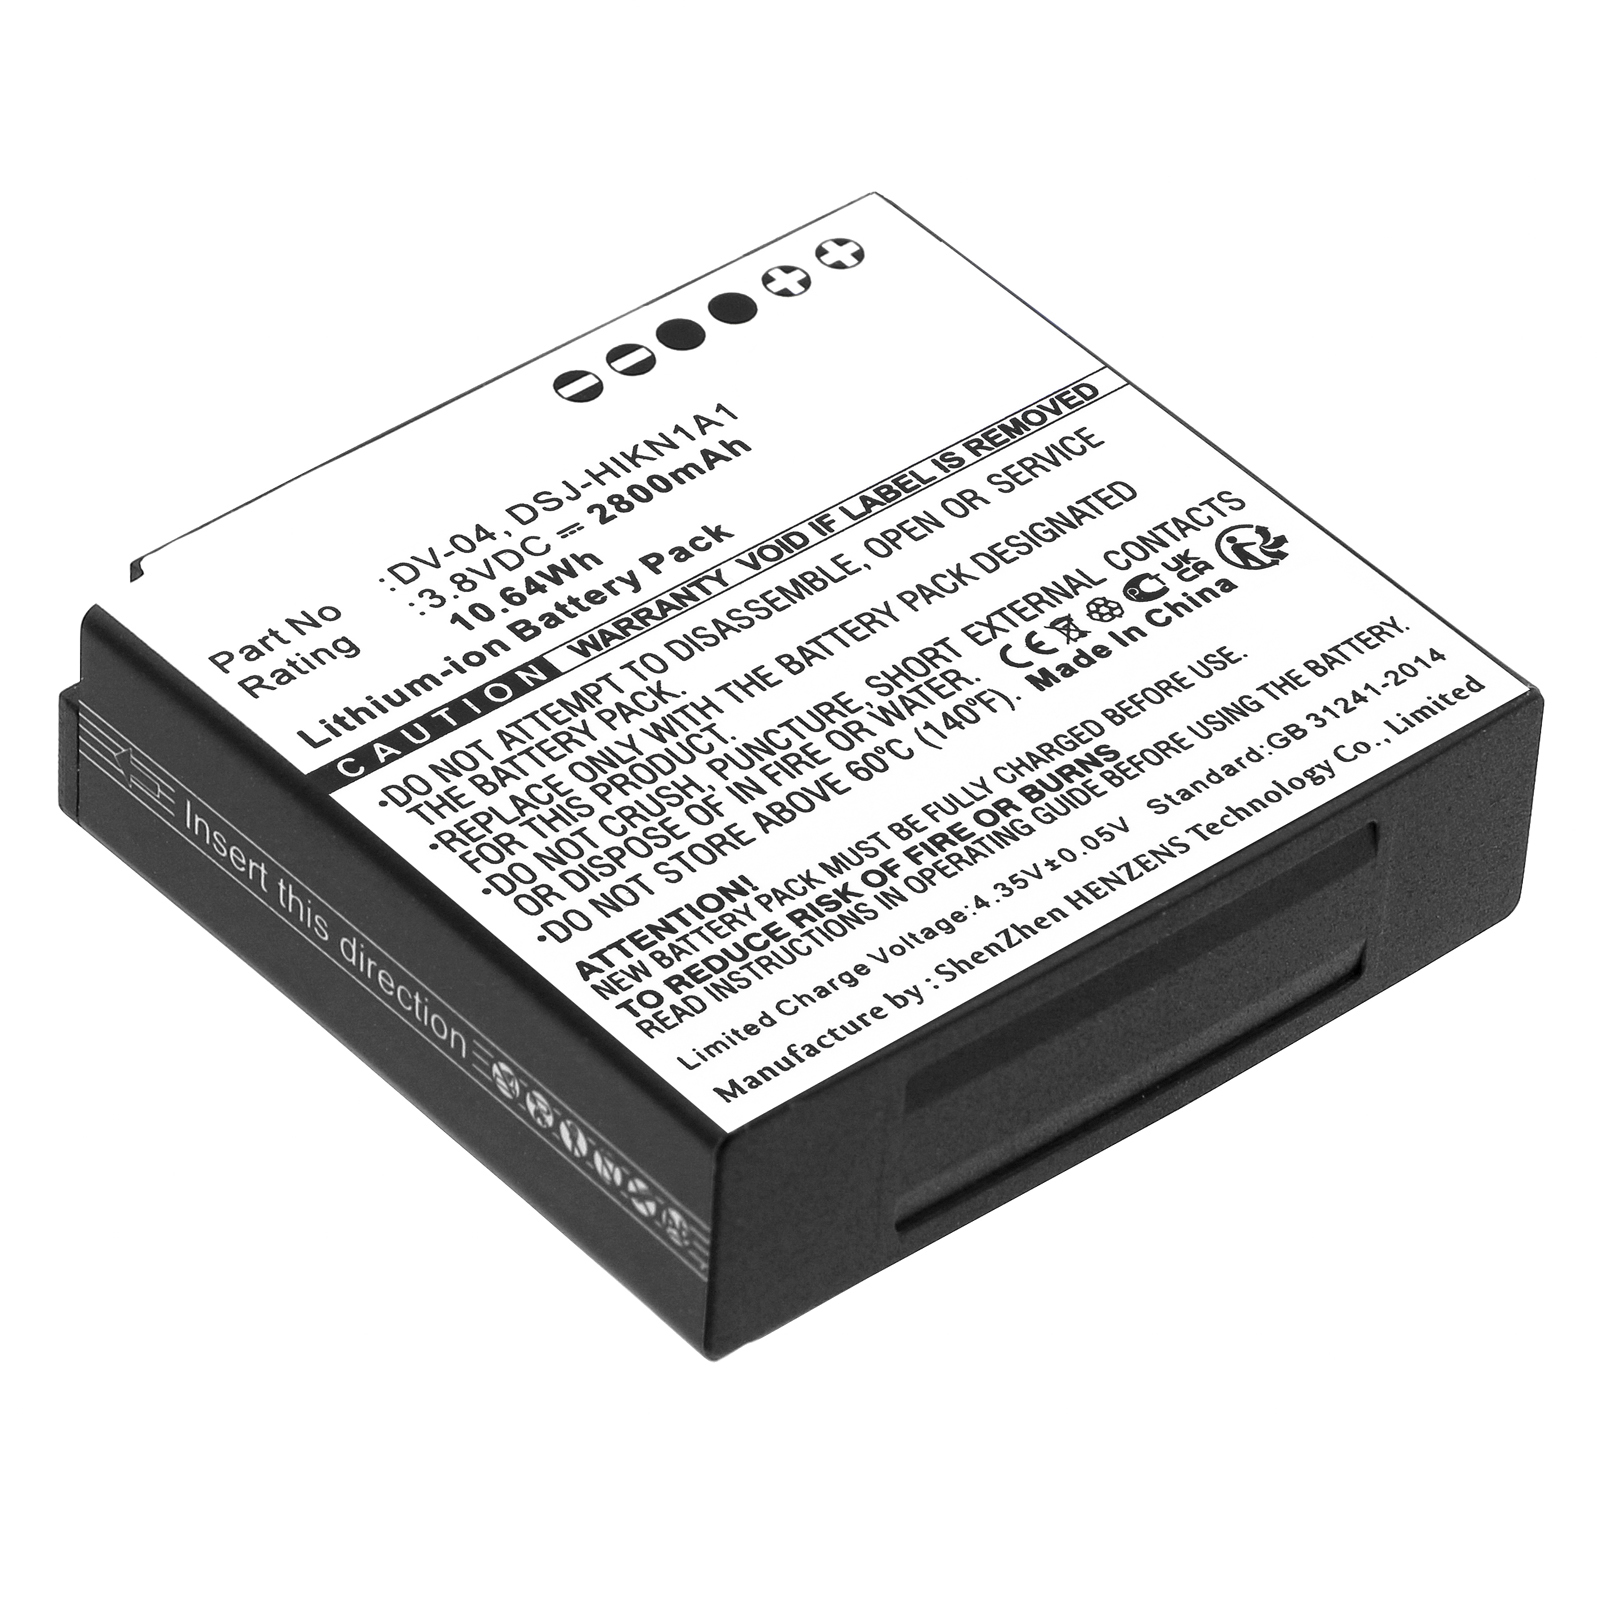 Synergy Digital Digital Camera Battery, Compatible with Hikvision DSJ-HIKN1A1 Digital Camera Battery (Li-ion, 3.8V, 2800mAh)